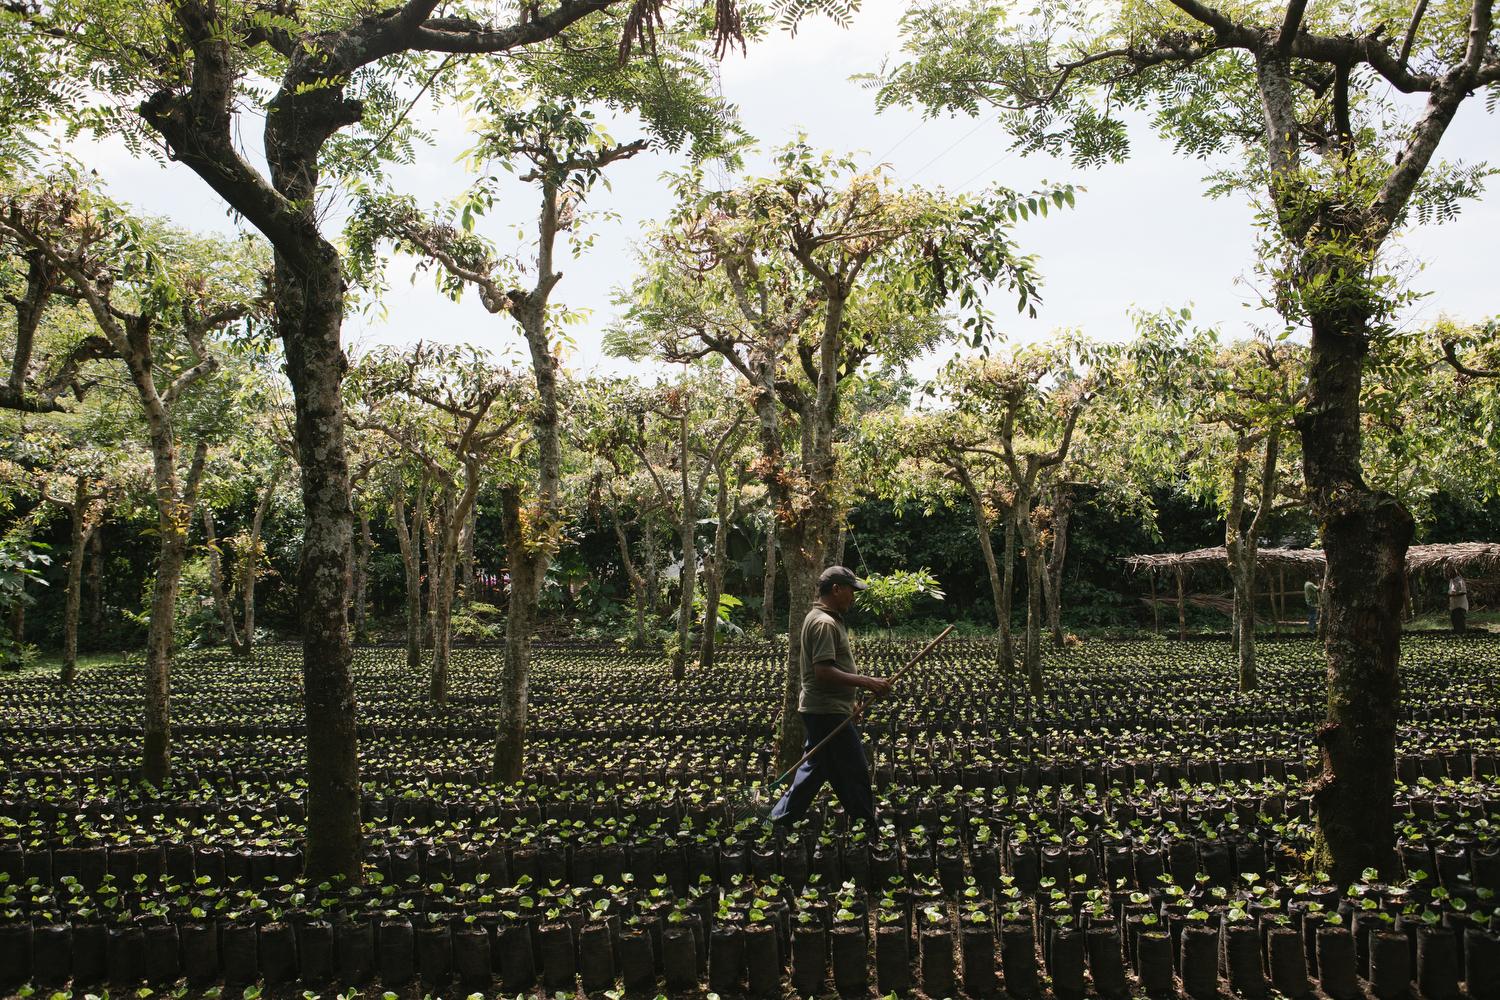 Homepage - A coffee farmer tends to the nursery at the Finca San...